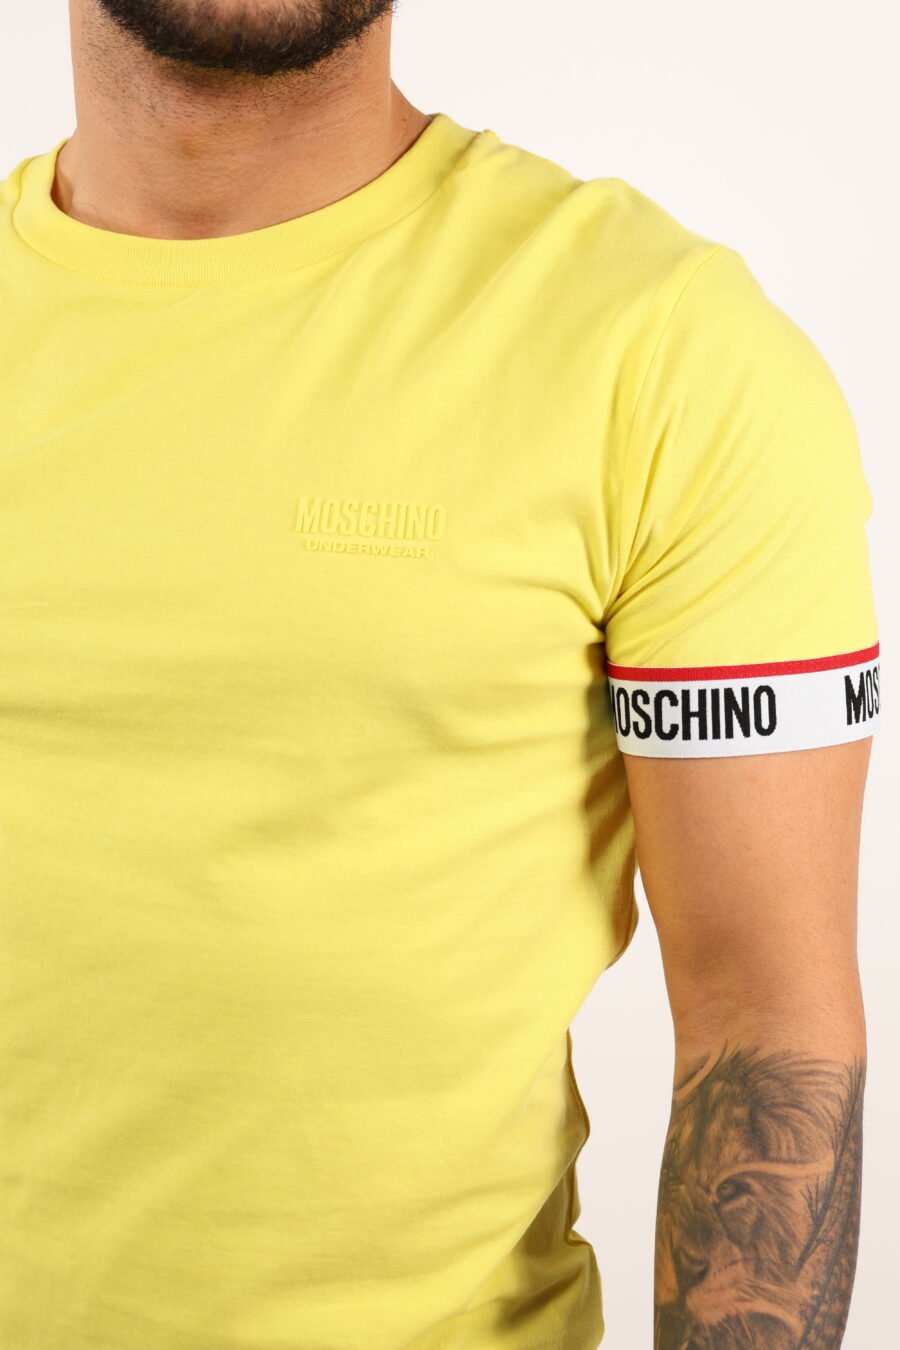 Camiseta amarilla con logo blanco en mangas - 109263